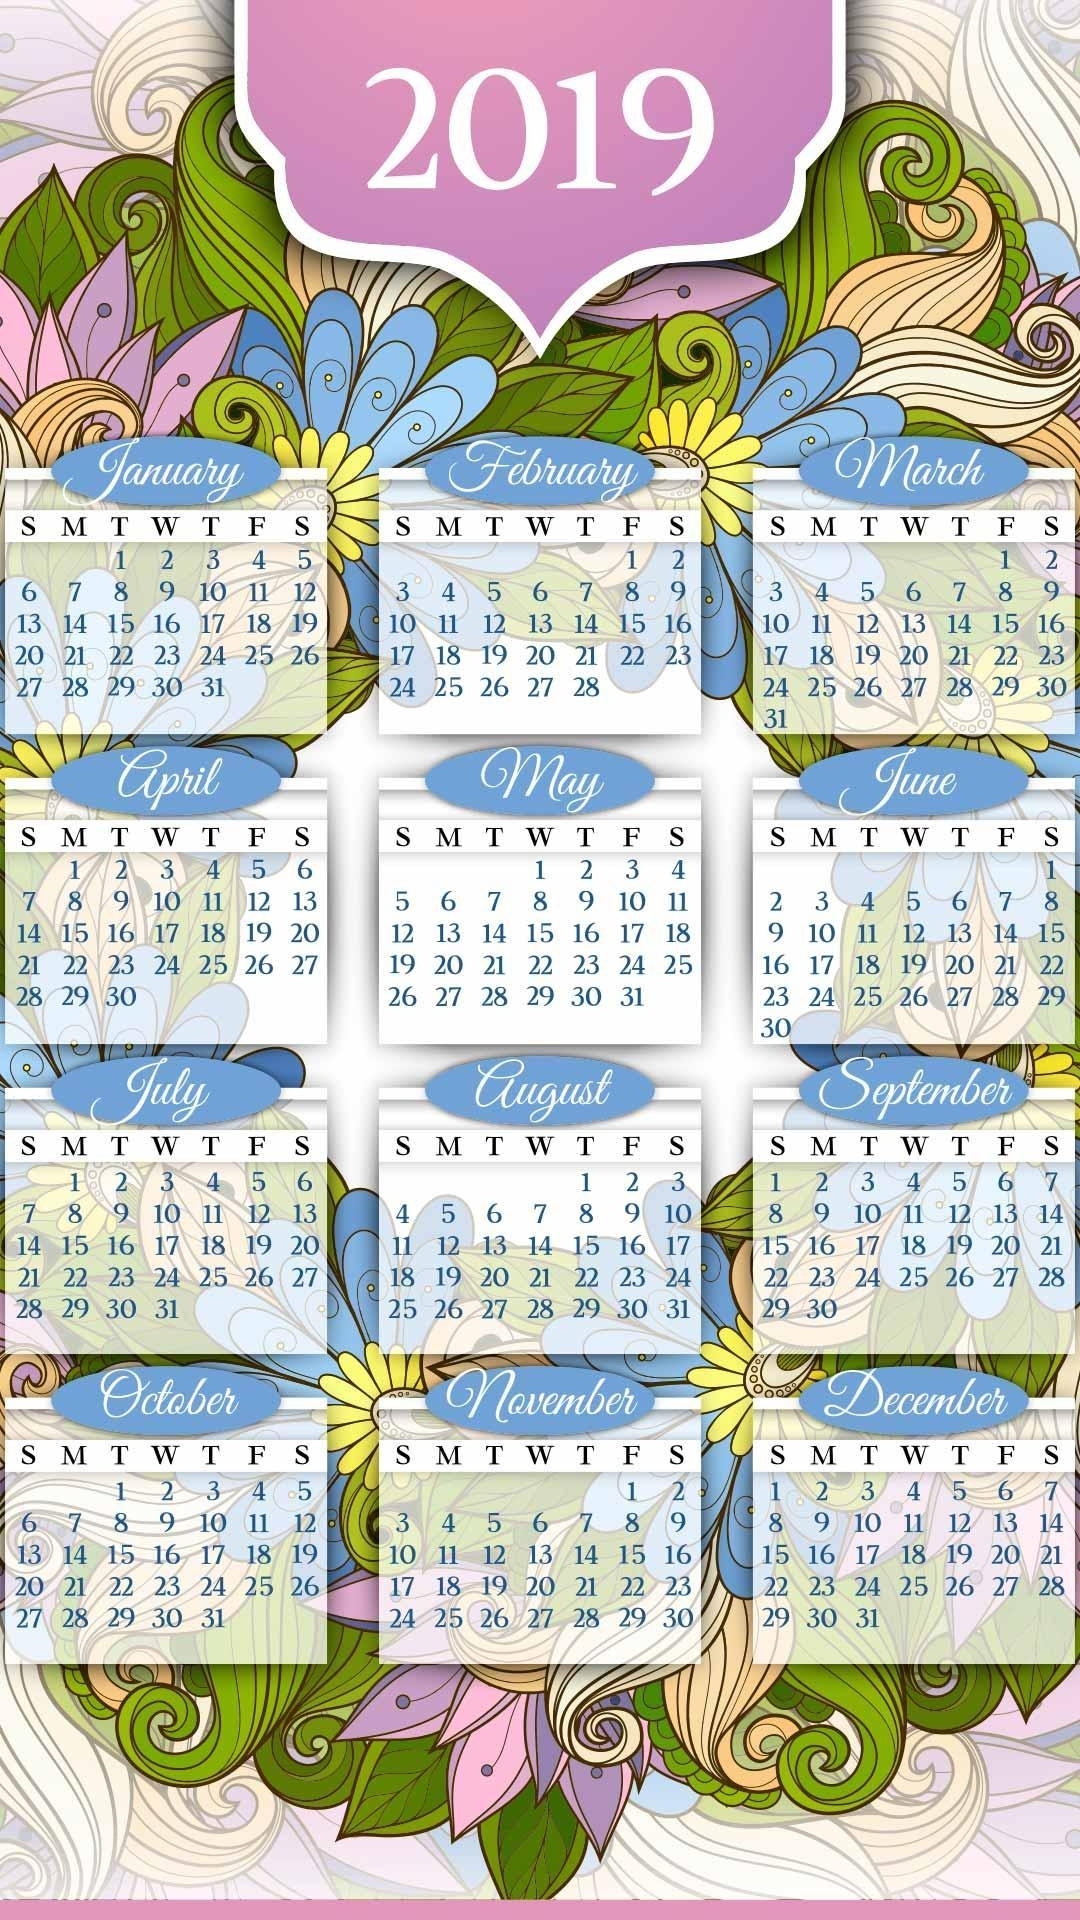 Gregorian Calendar 2019 For Android - Apk Download